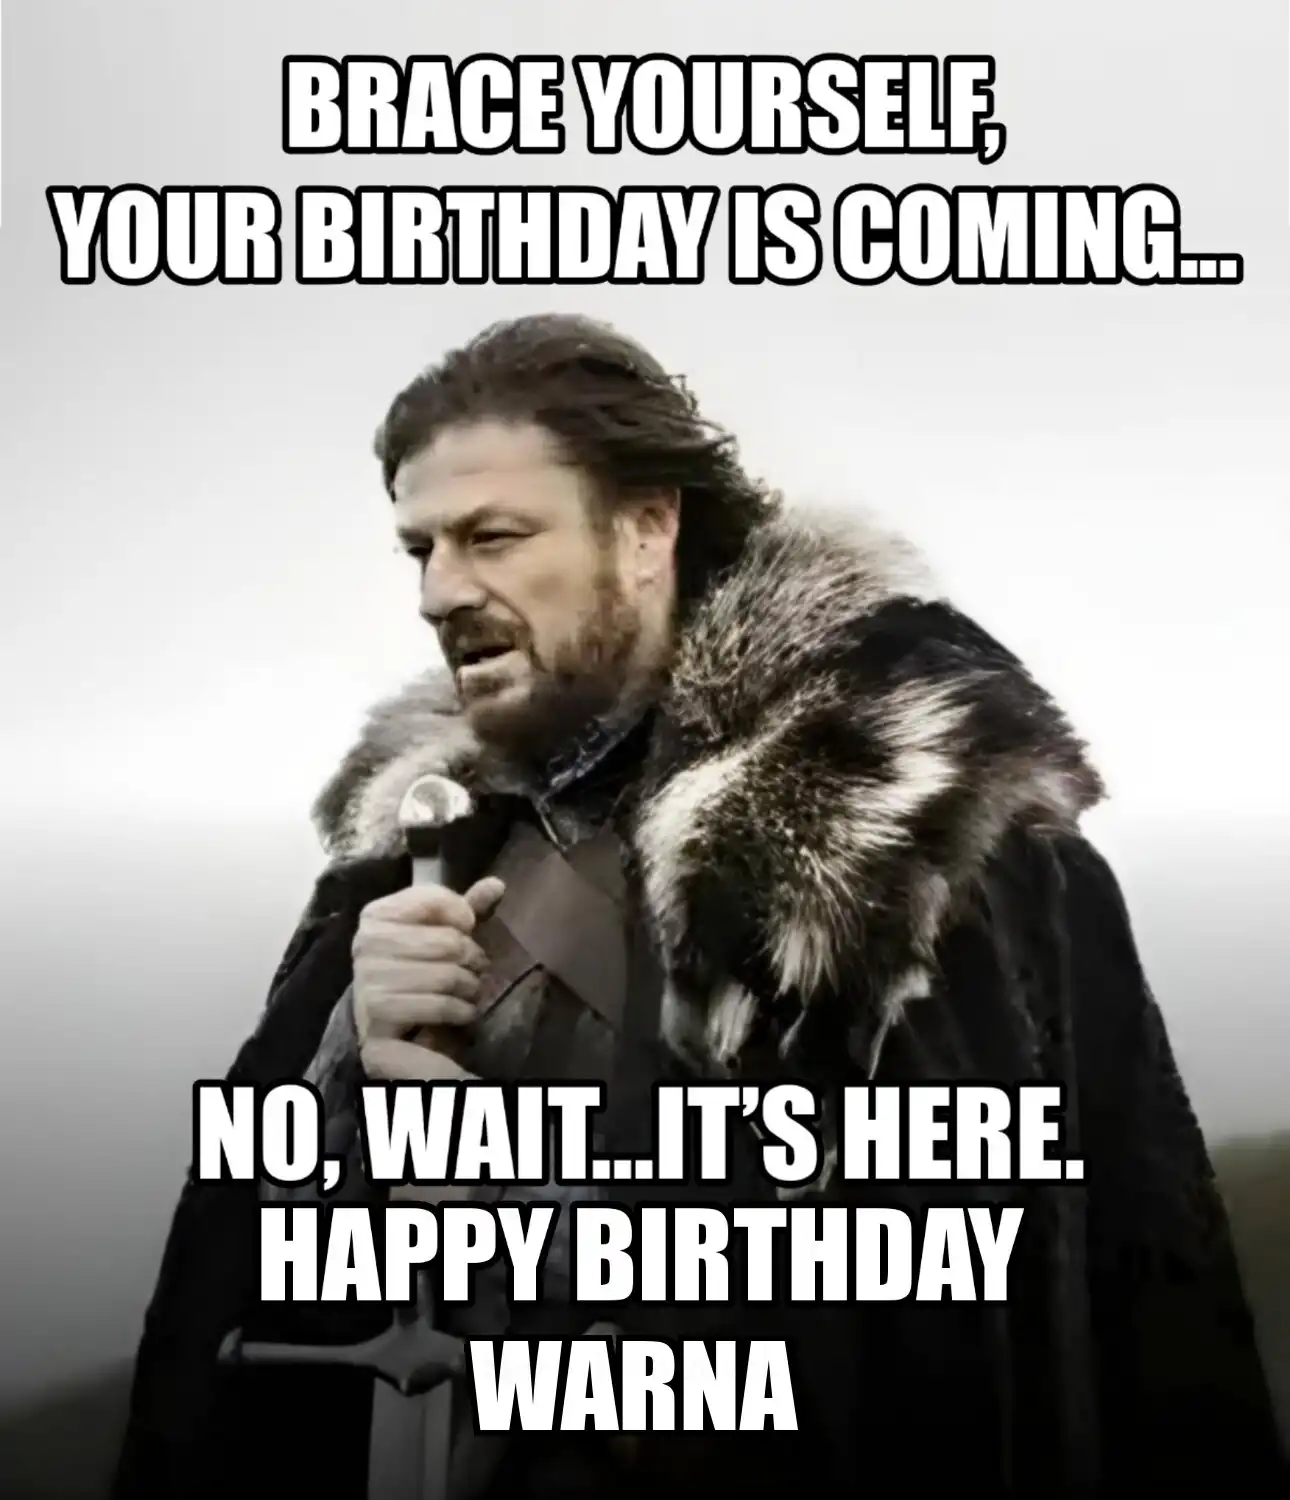 Happy Birthday Warna Brace Yourself Your Birthday Is Coming Meme